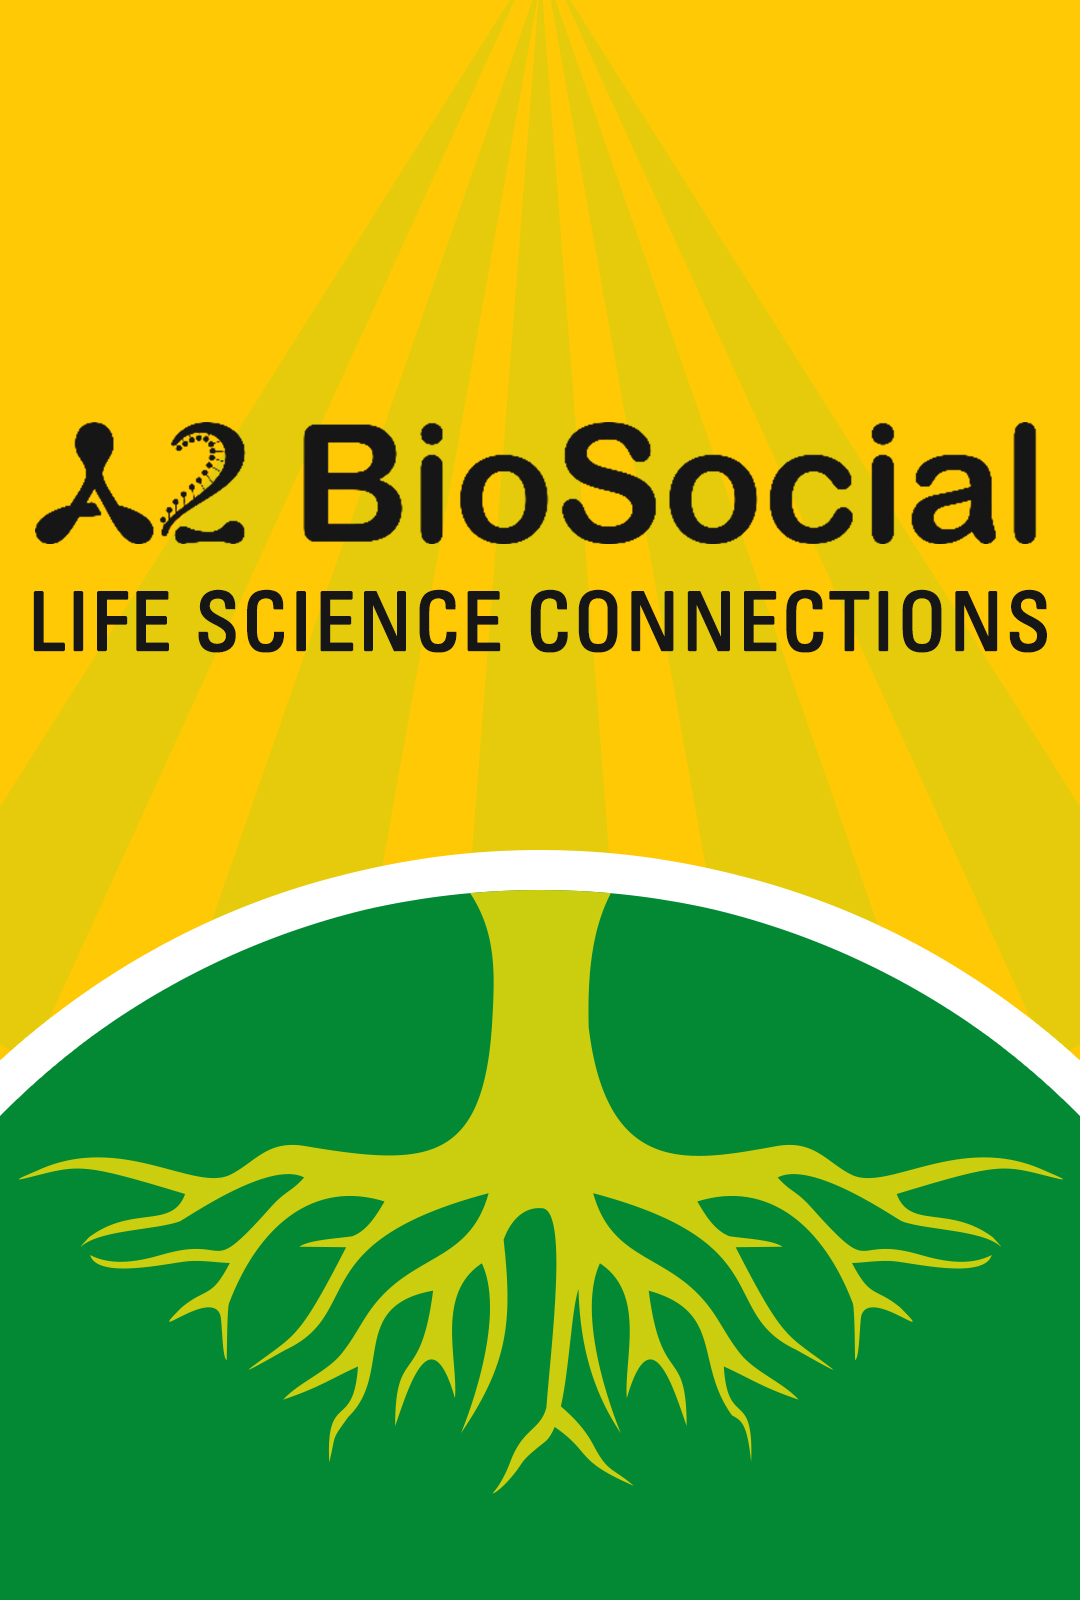 A2 BioSocial